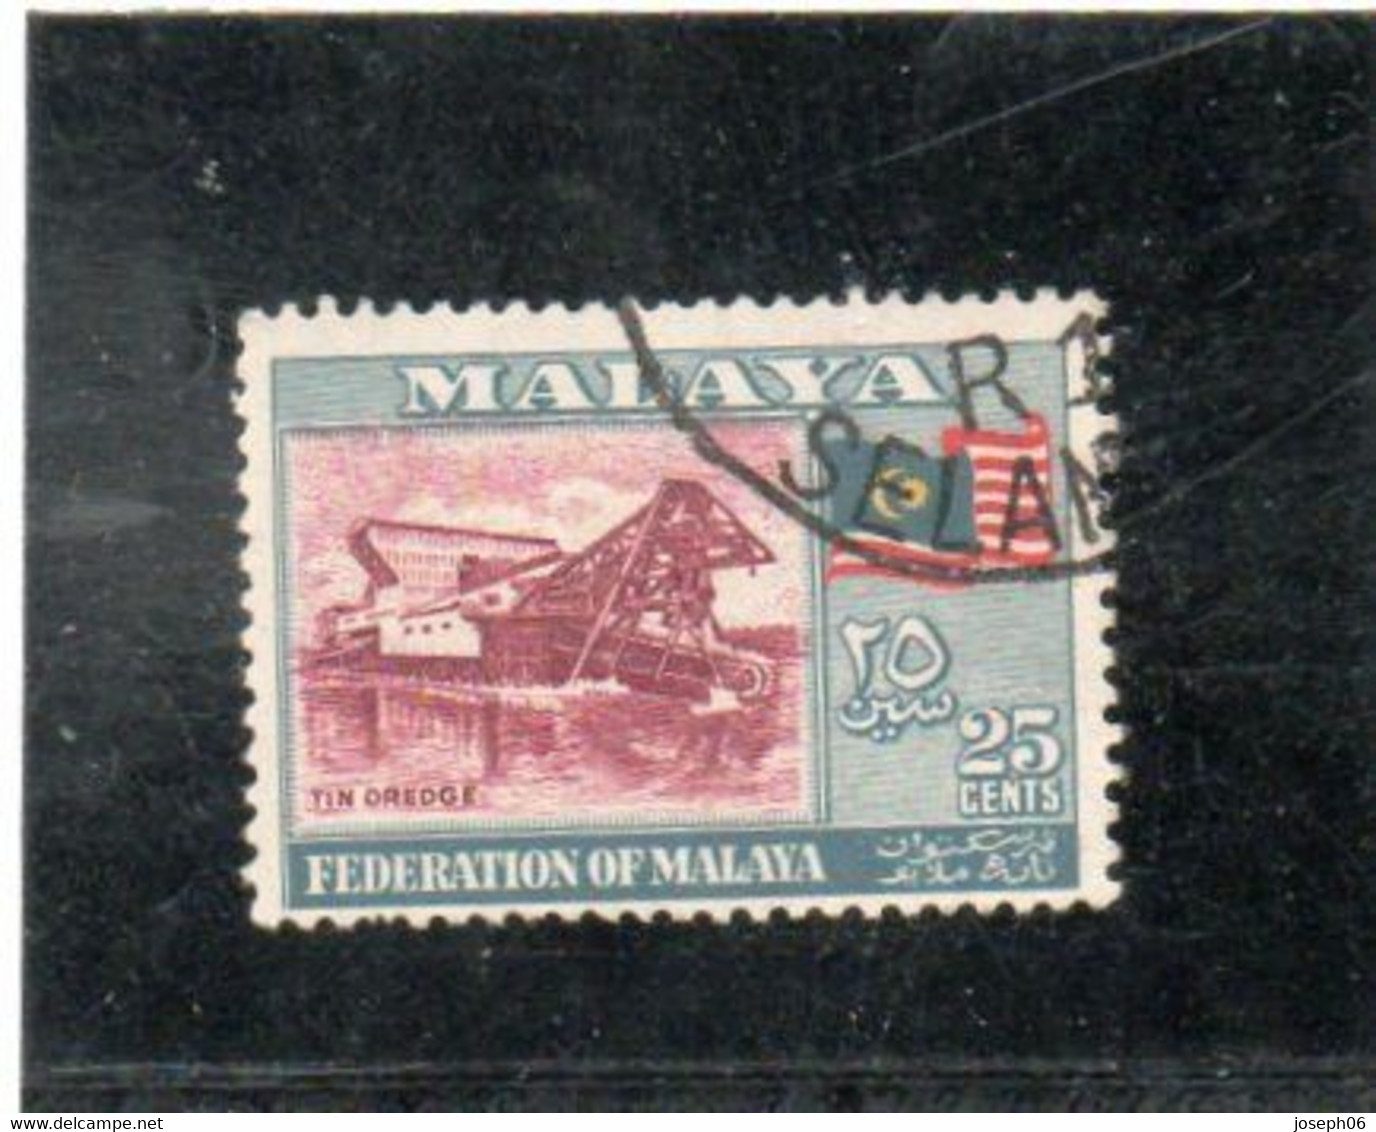 MALAISIE   Malaya   1957-61  Y.T. N° 80 à 83  Incomplet  Oblitéré - Fédération De Malaya